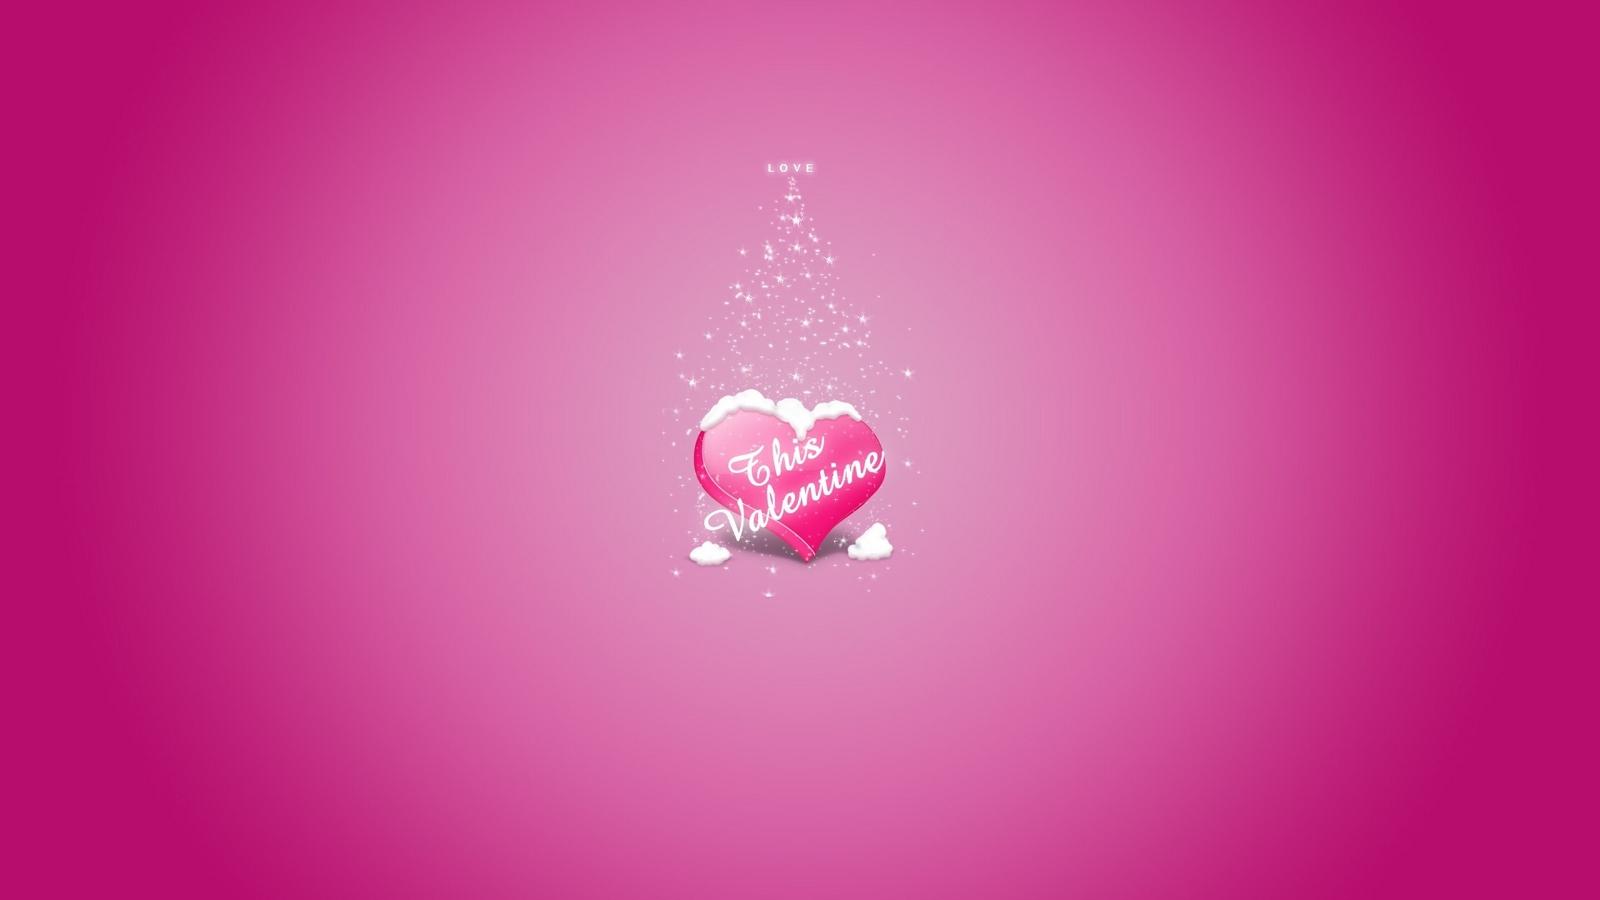 Download wallpaper 1600x900 valentines day, heart, pink